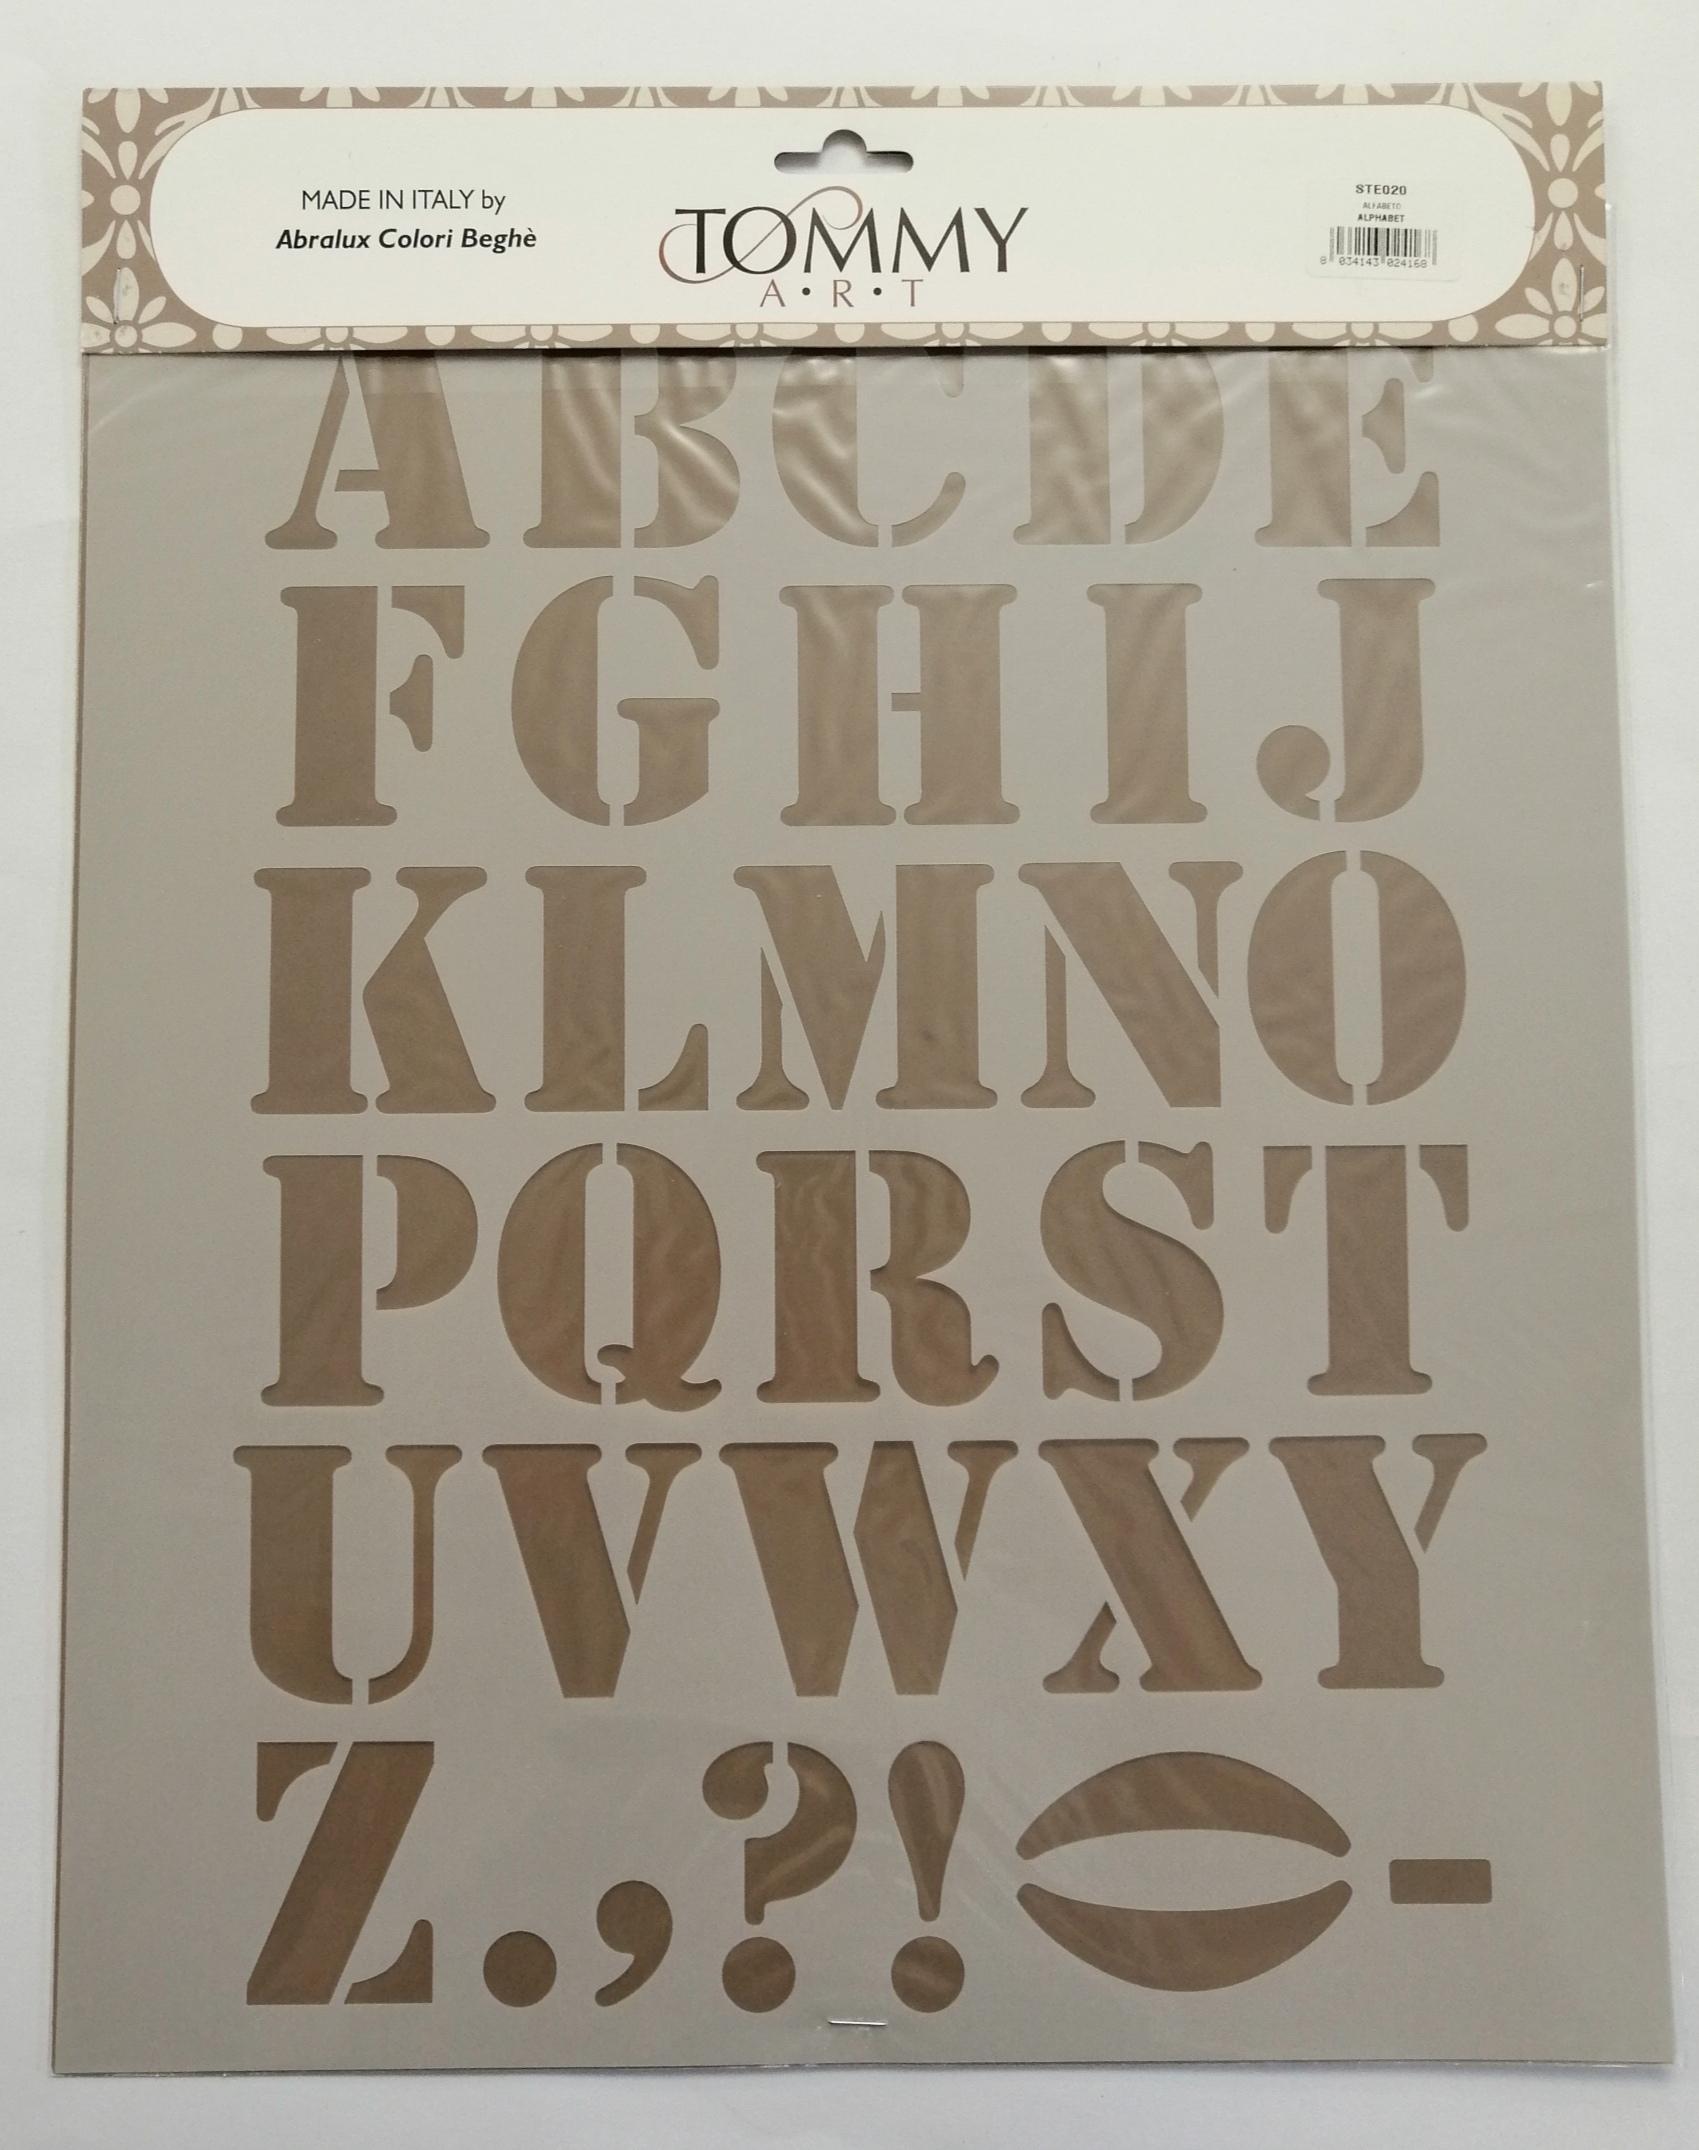 Stencil alfabeto stampatello tommy art 34 x 40 cm - Bagheria (Palermo)